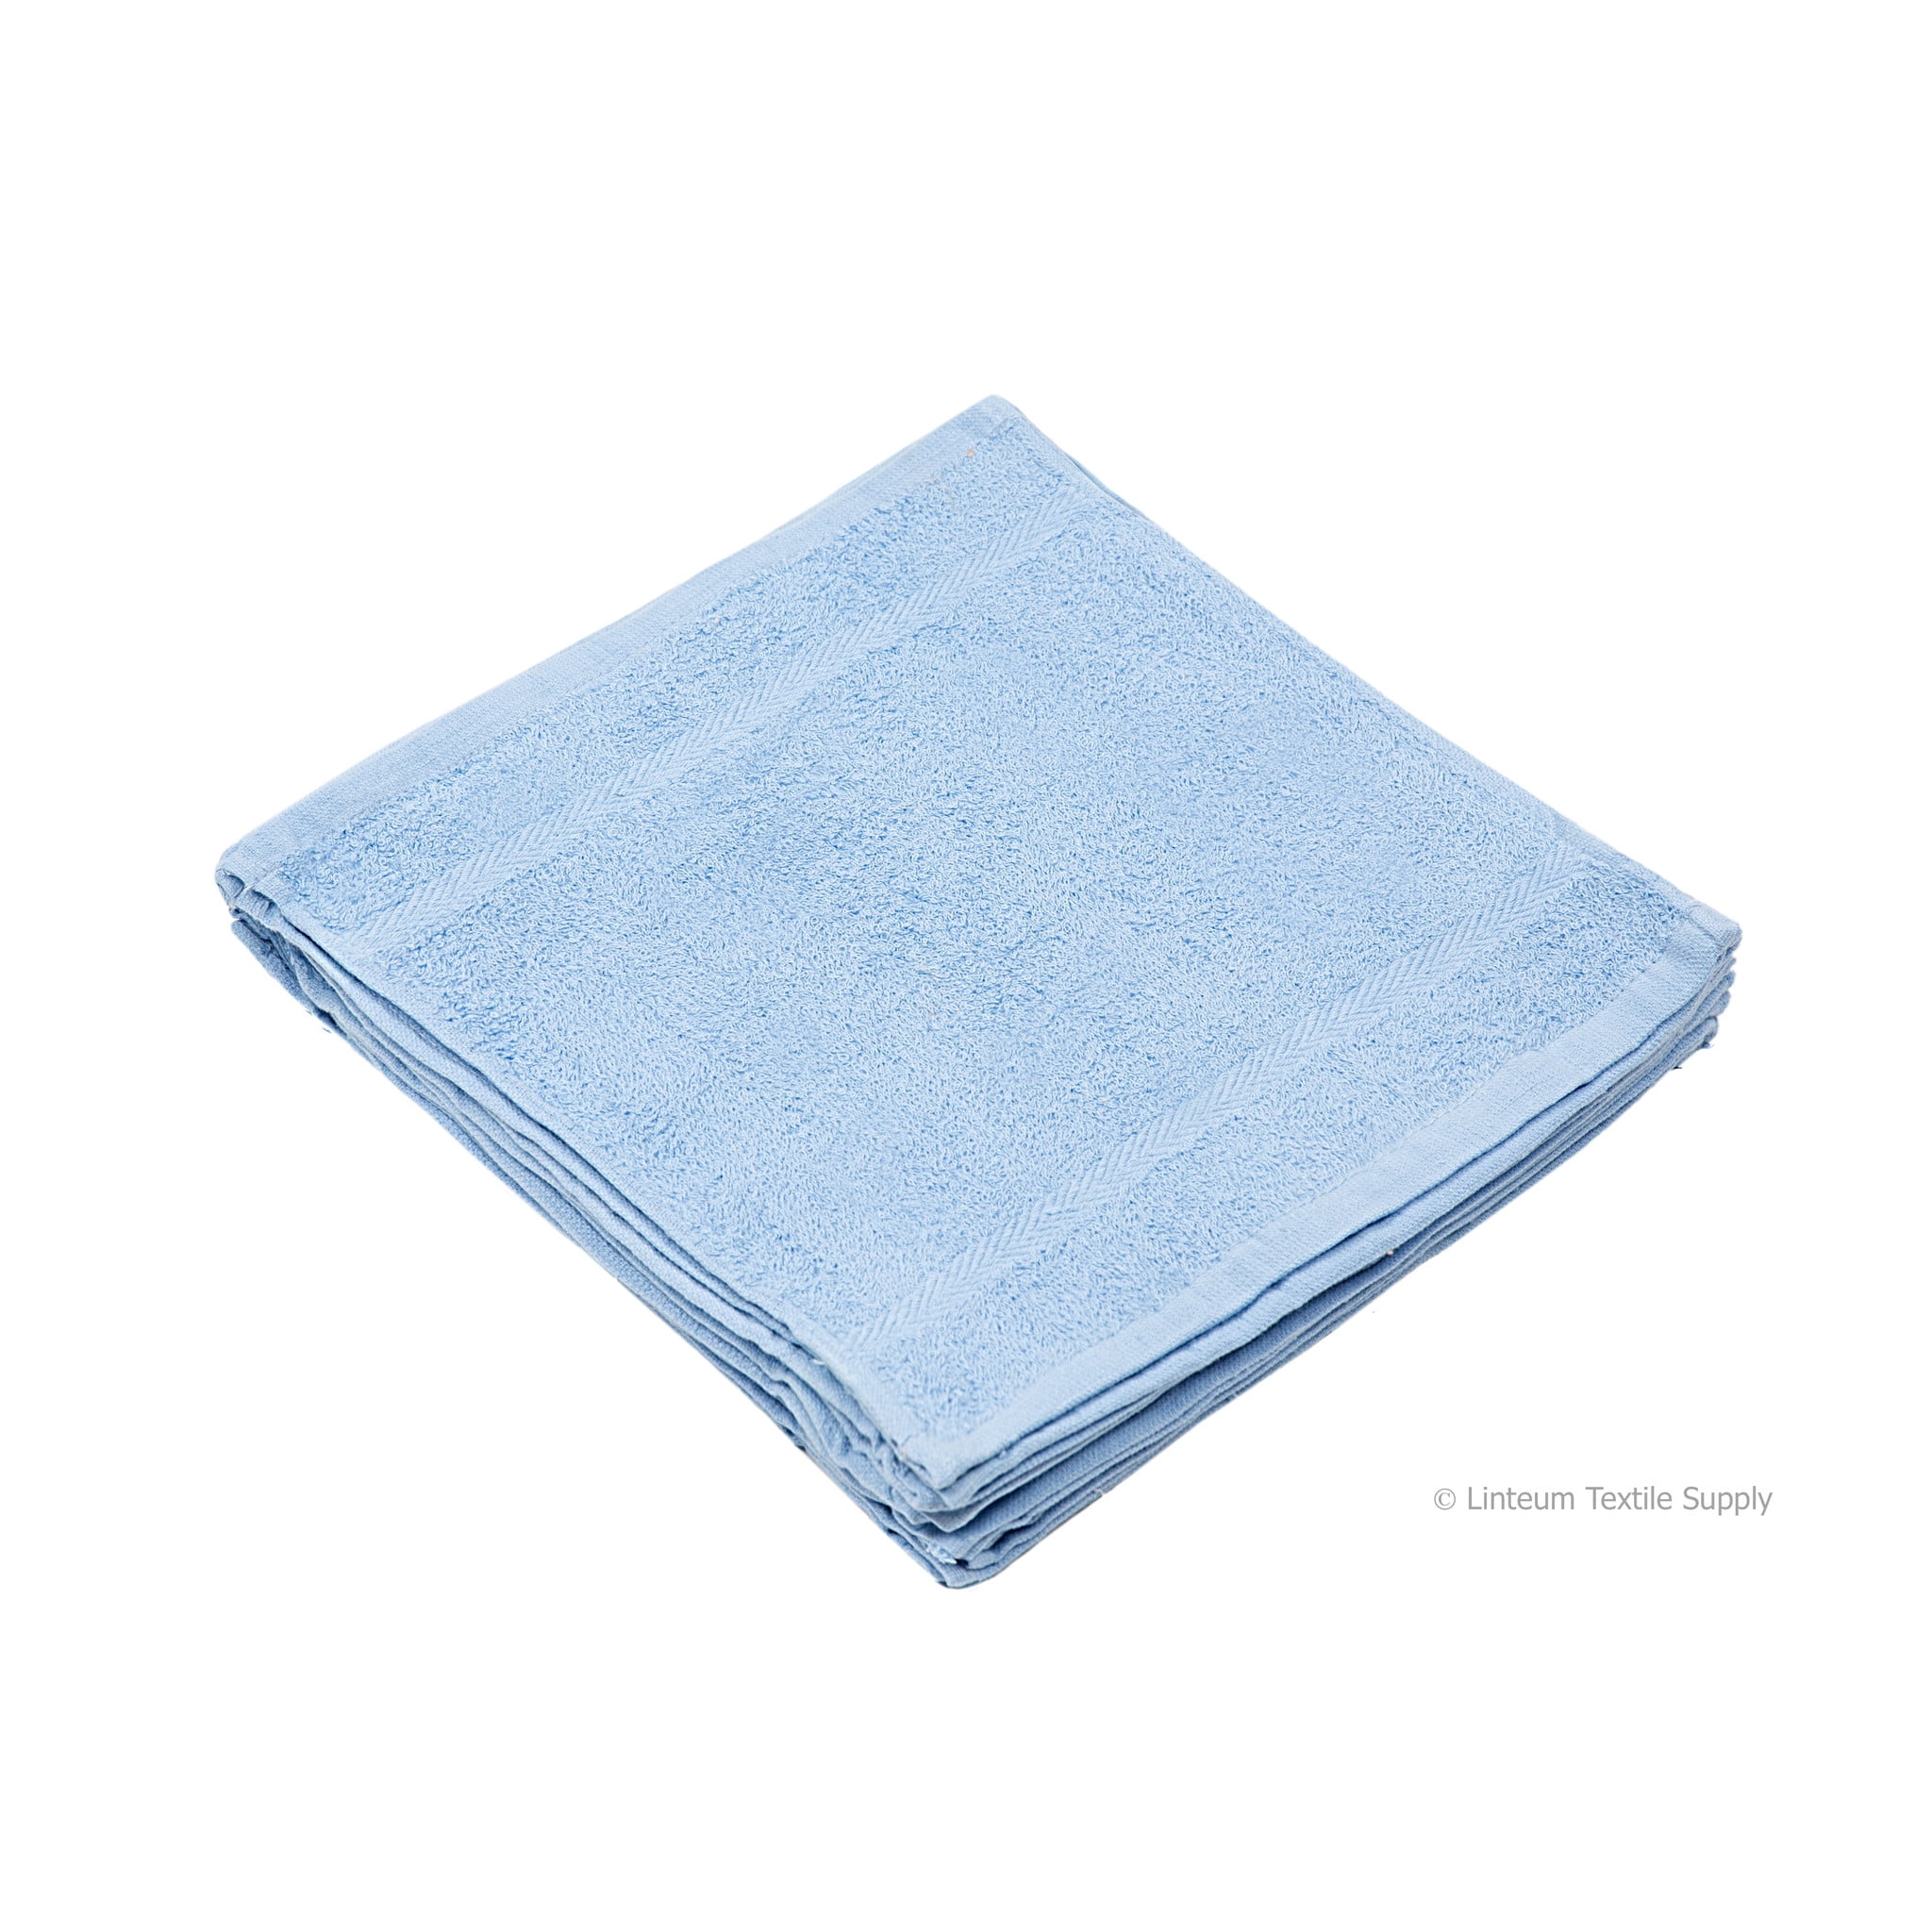 Linteum Textile (12-Pack, 12x12 in, Light Blue) WASHCLOTHS Face Towels ...